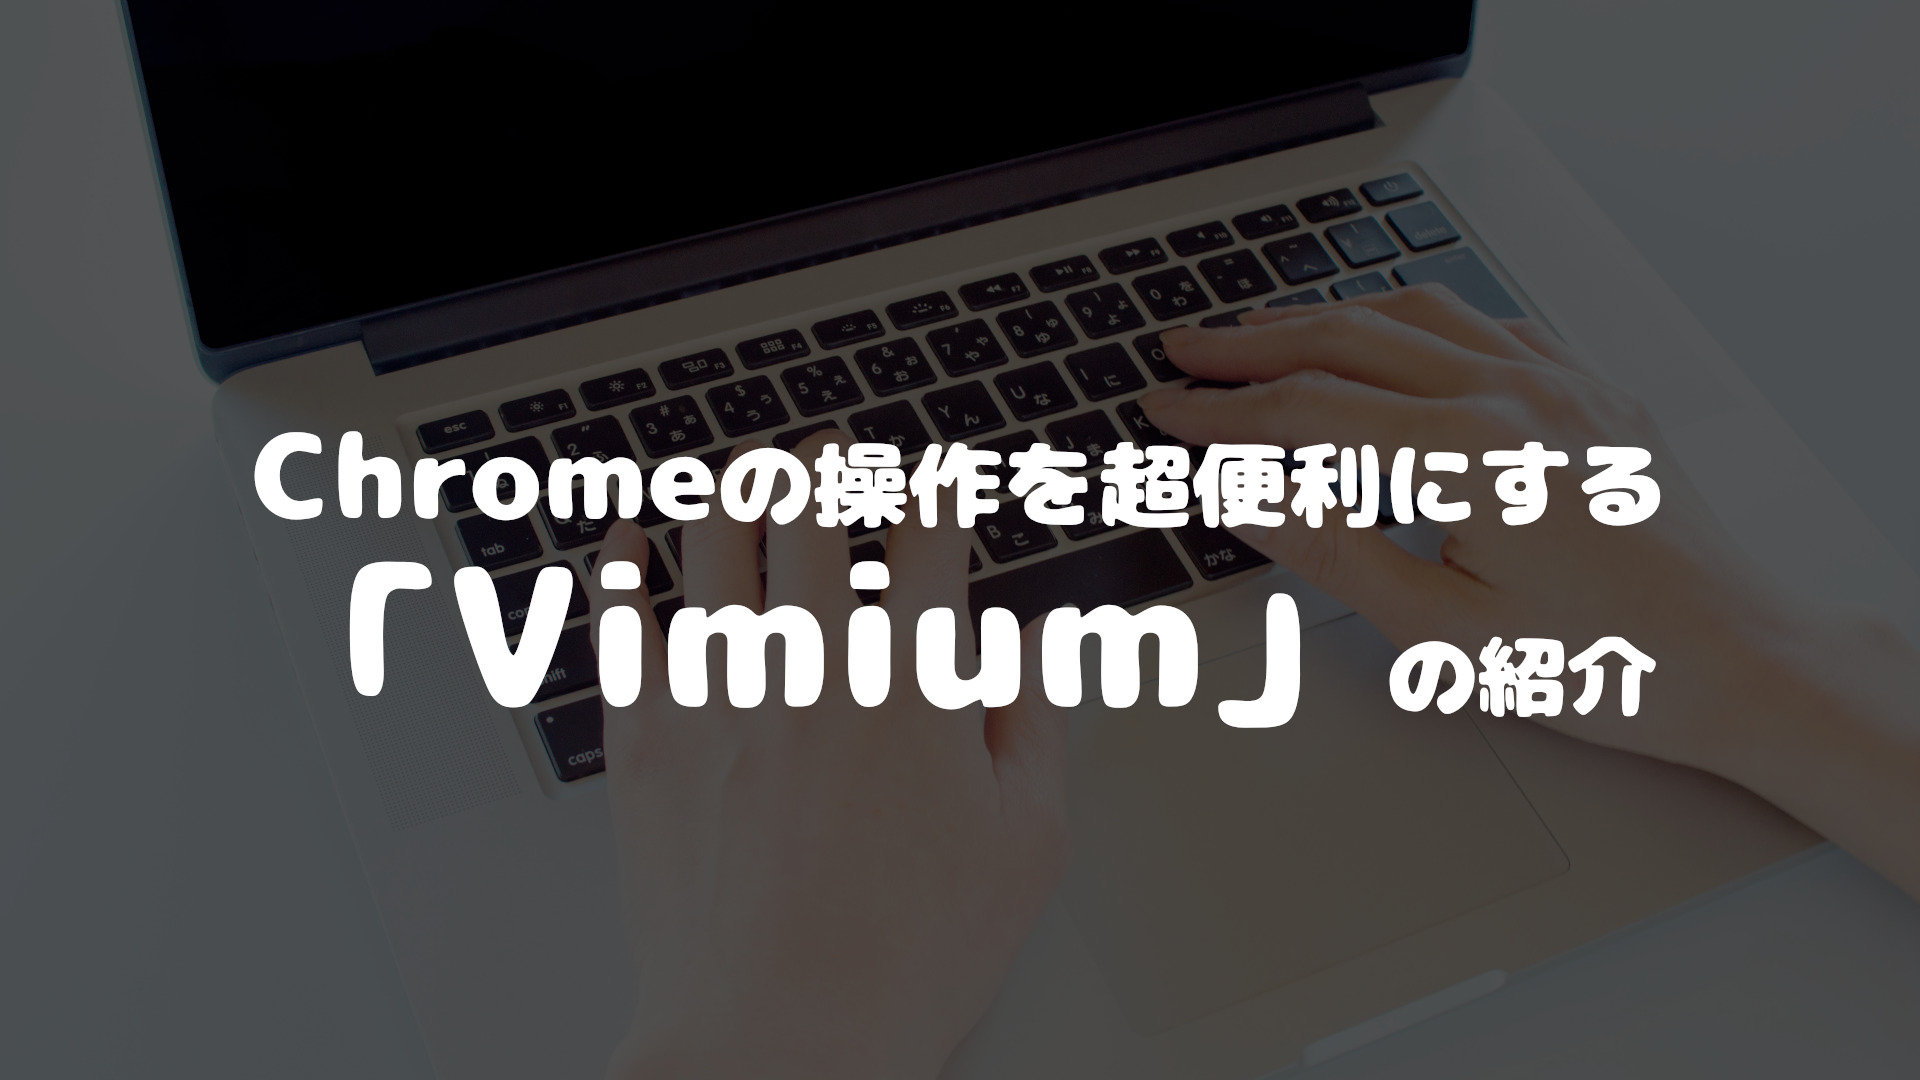 You are currently viewing Chrome操作を超便利にする拡張機能「Vimium」の紹介